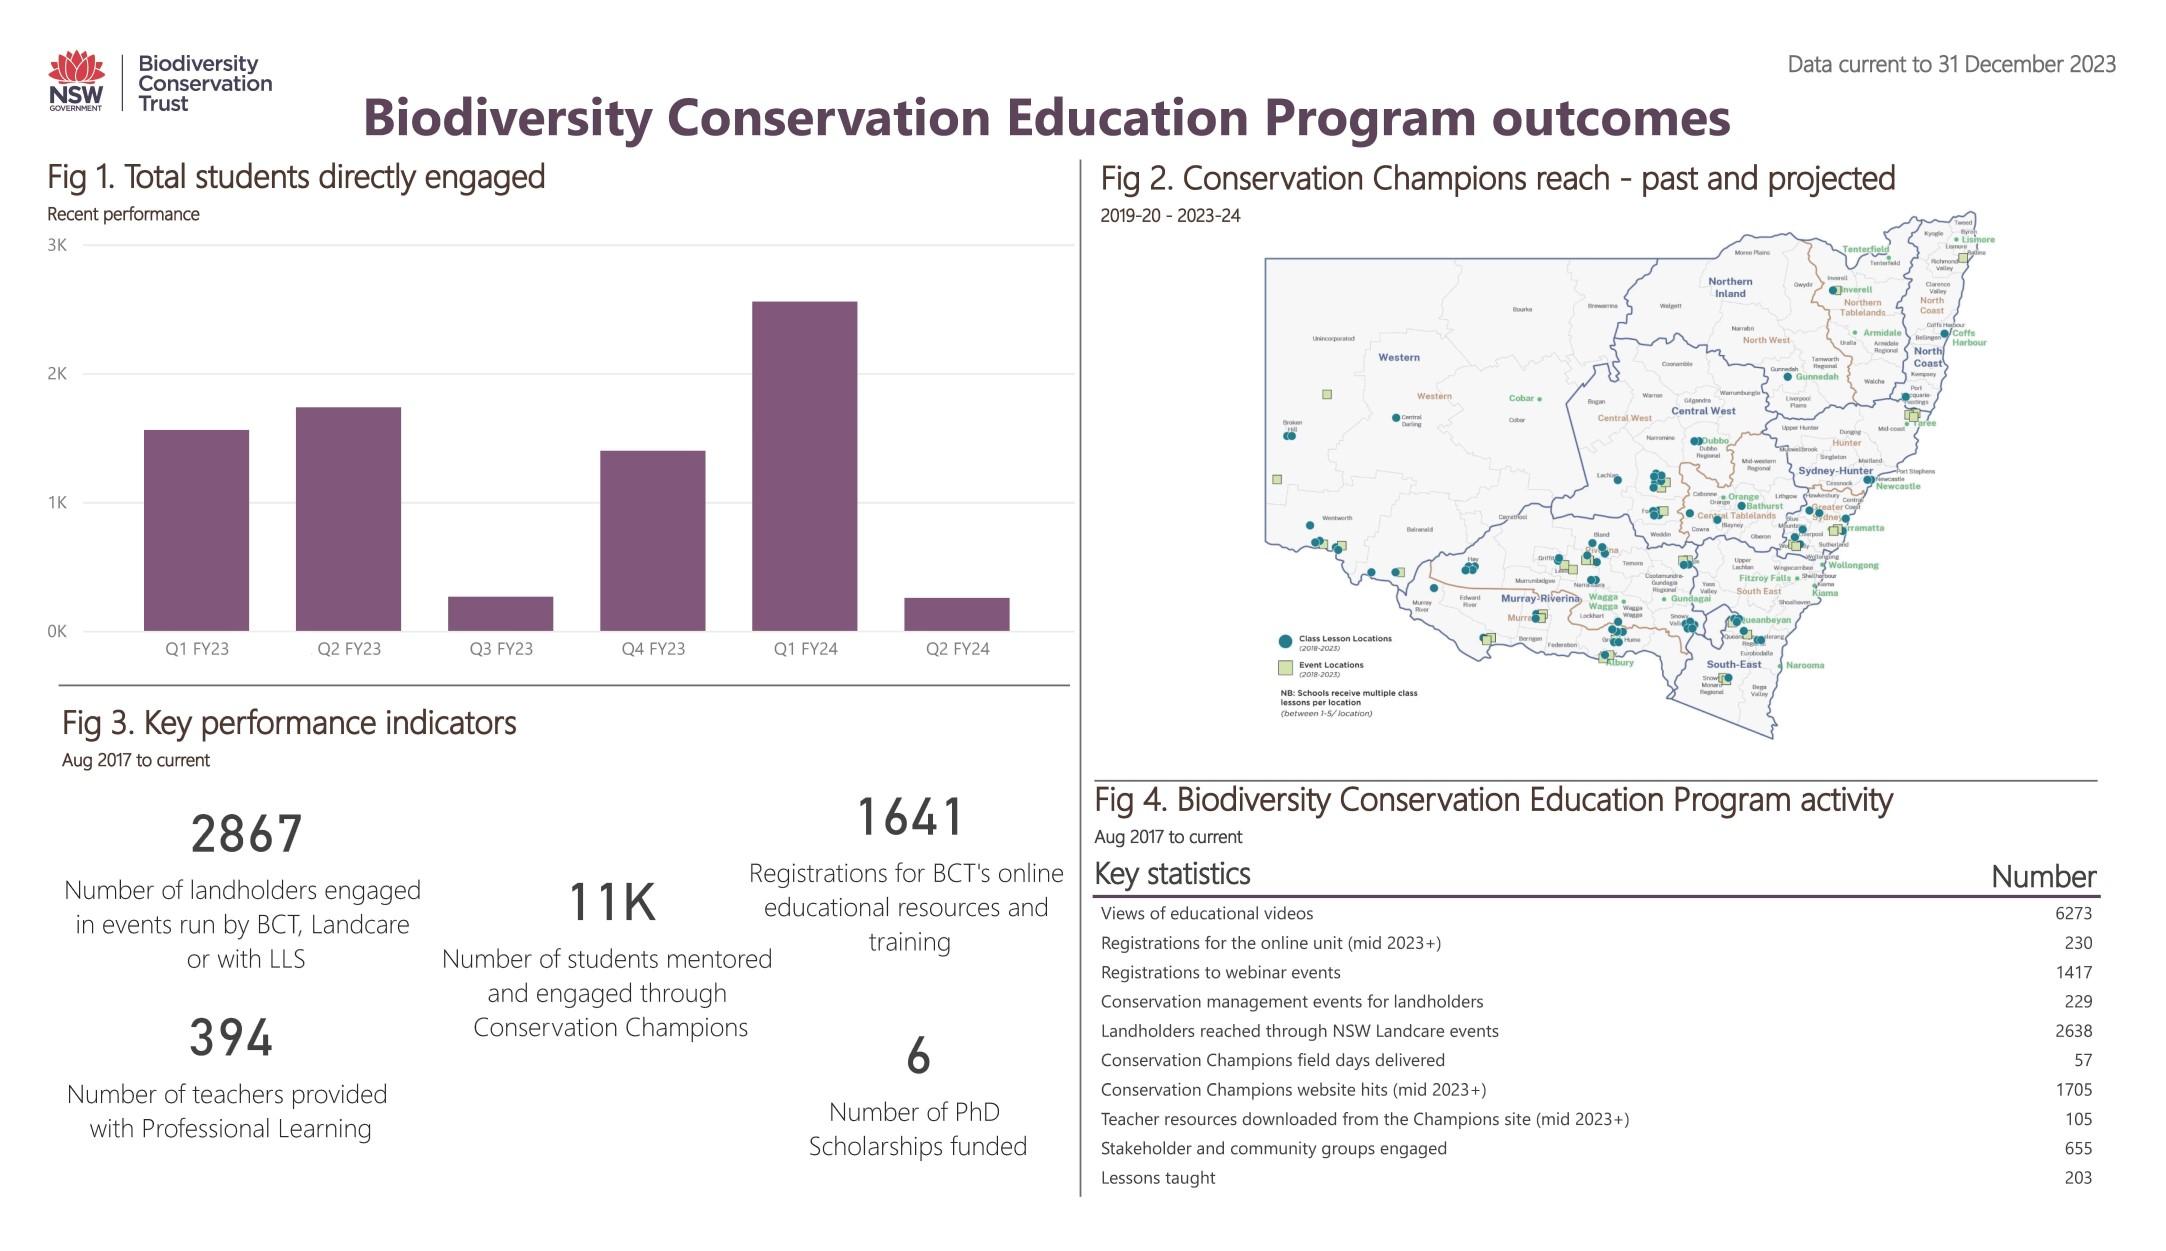 Biodiversity Conservation Education Program dashboard data as at 31 December 2023